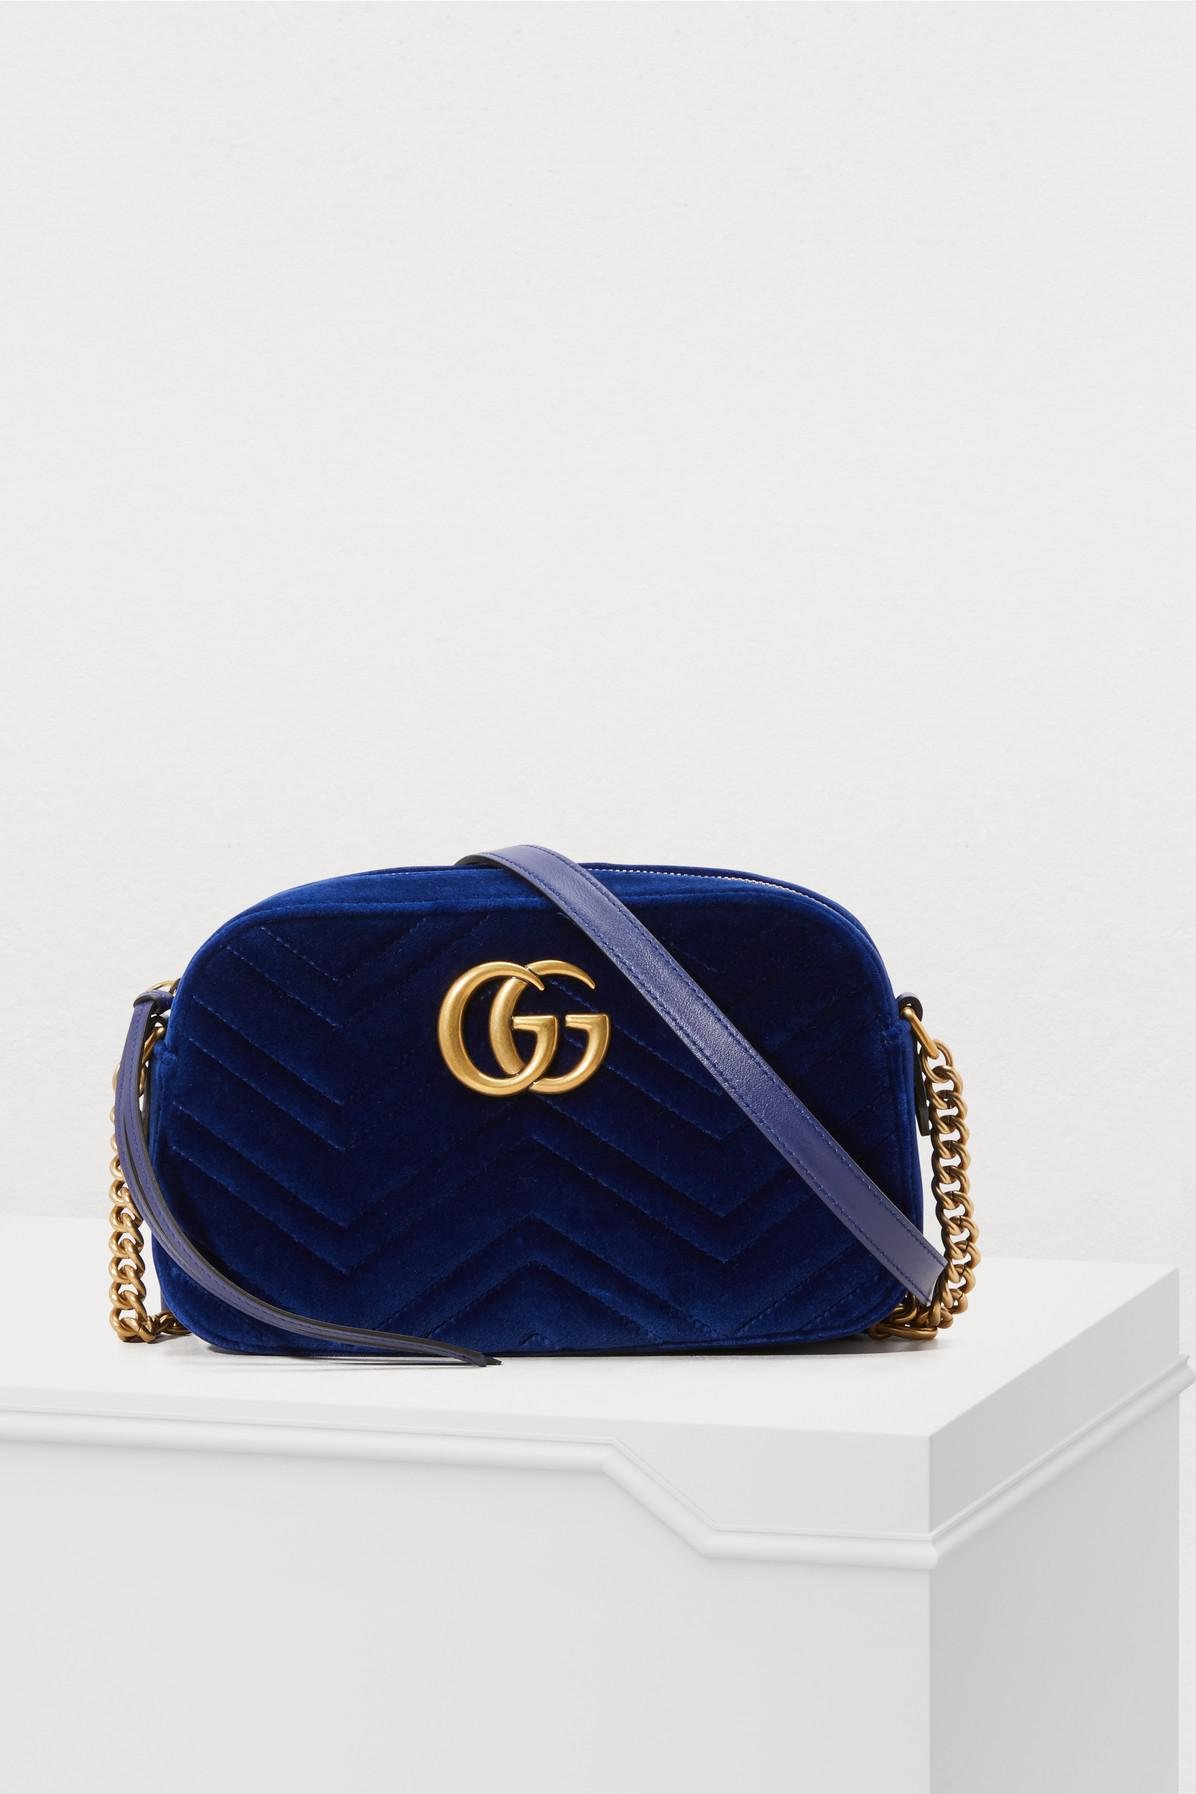 Gucci Gg Marmont Velvet Camera Bag in 